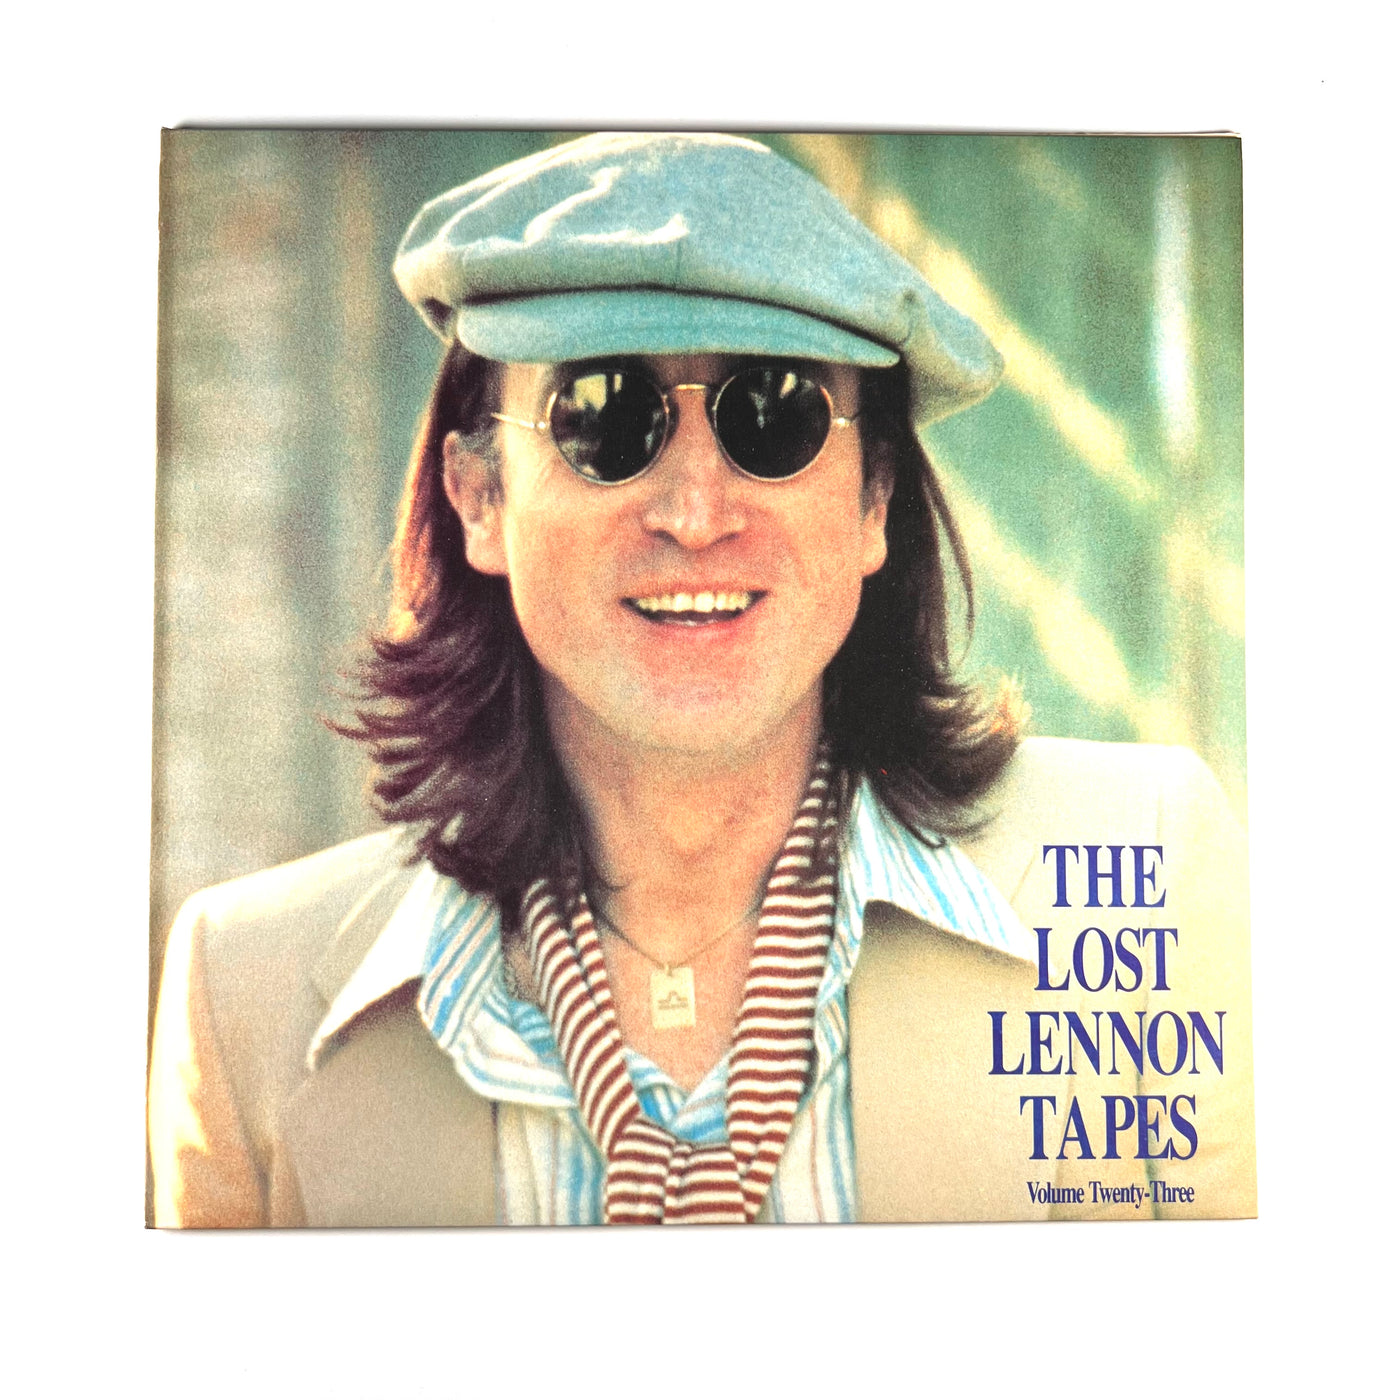 John Lennon - Lost Lennon Tapes Volume Twenty-three